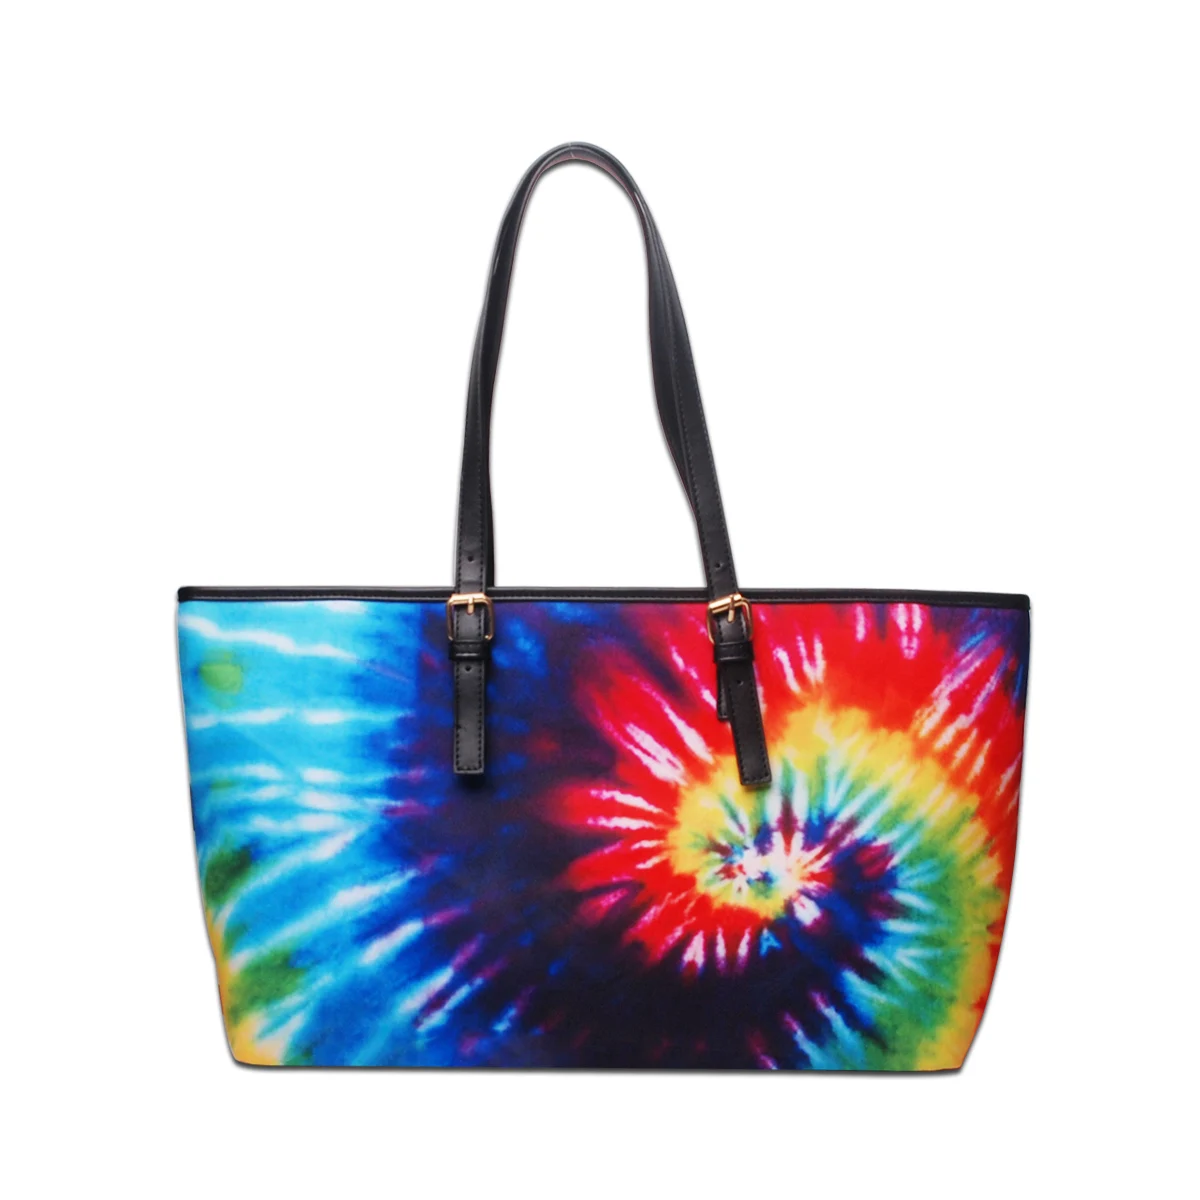 TFONE Abstract Flash Rainbow Women Handbag Fashion Shopping Travel Casual with Zipper Tote Shoulder Bag 